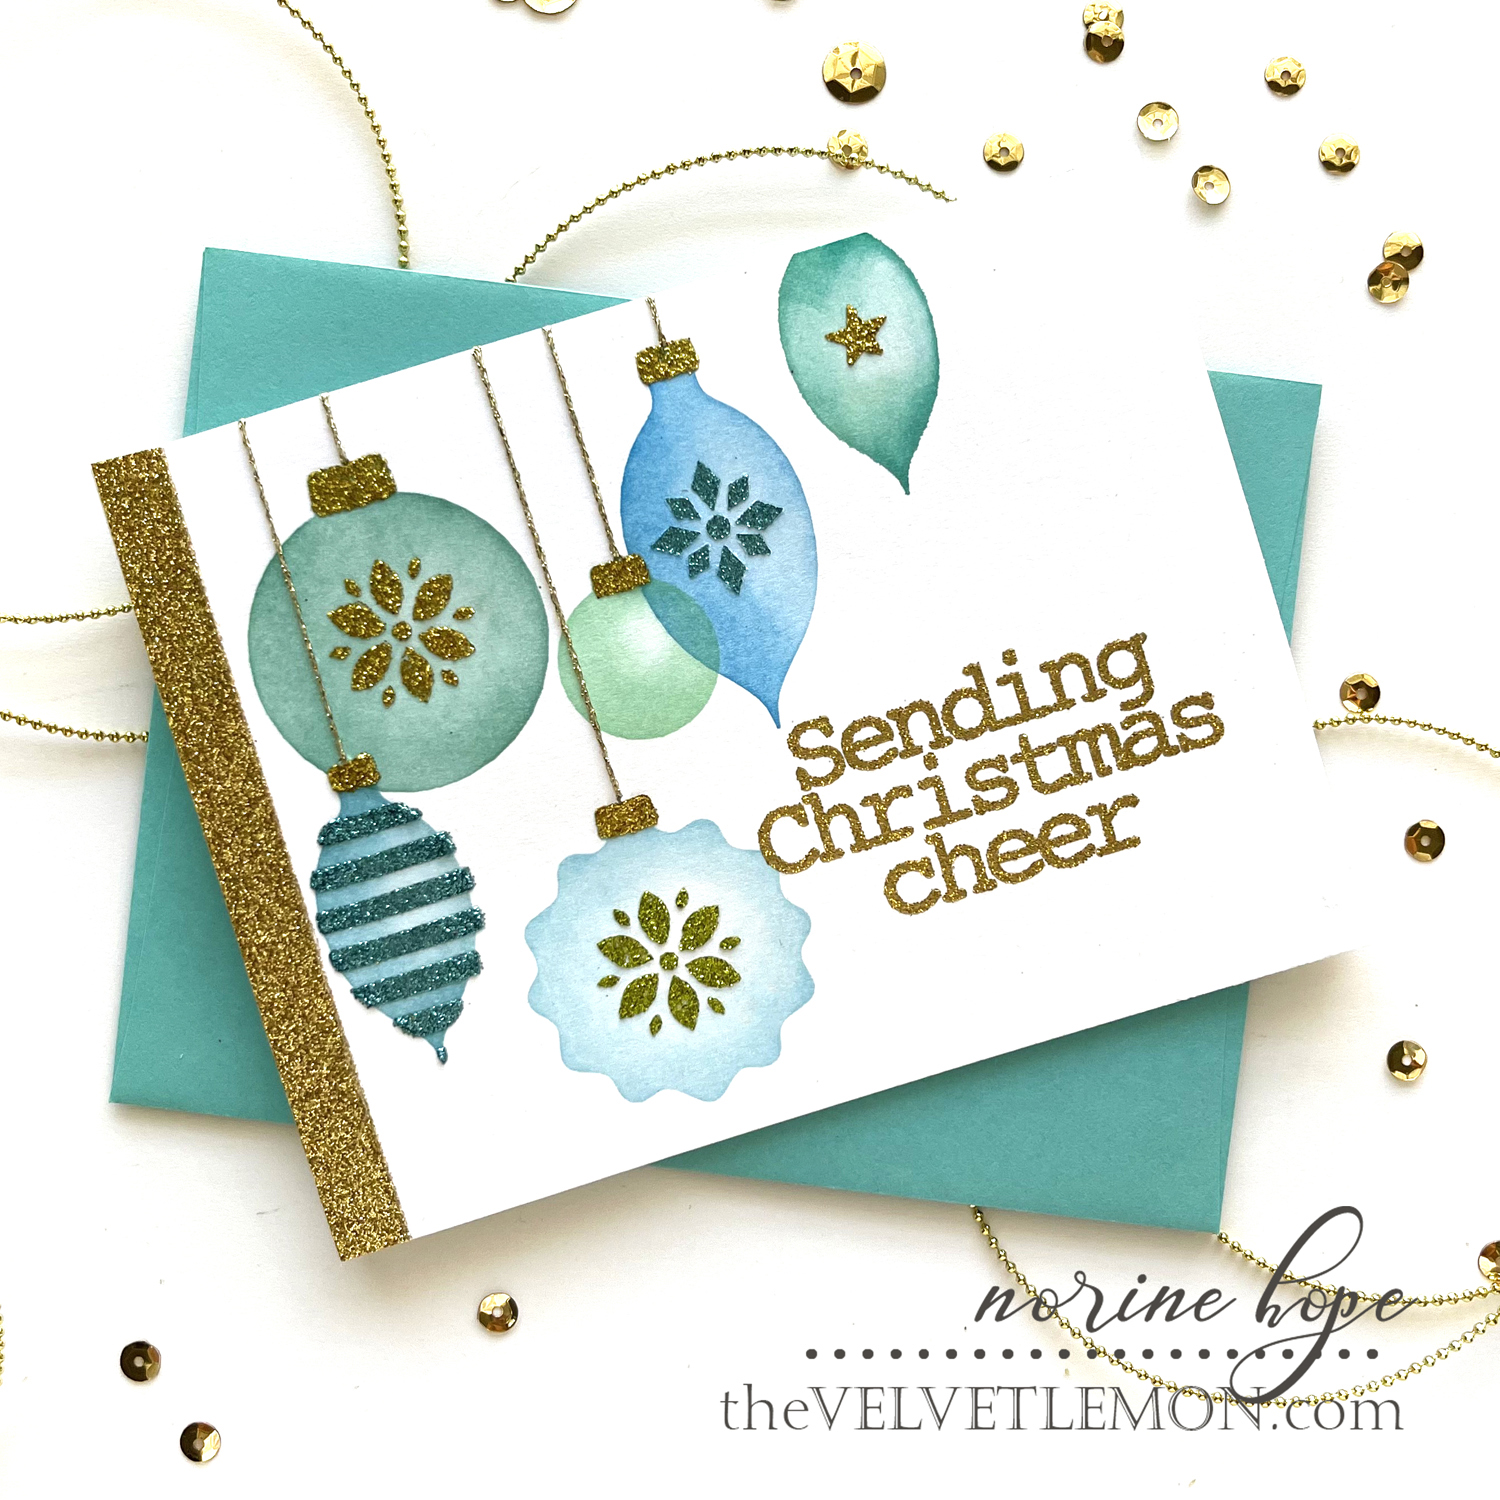 Handmade Greeting Cards – The Common Thread